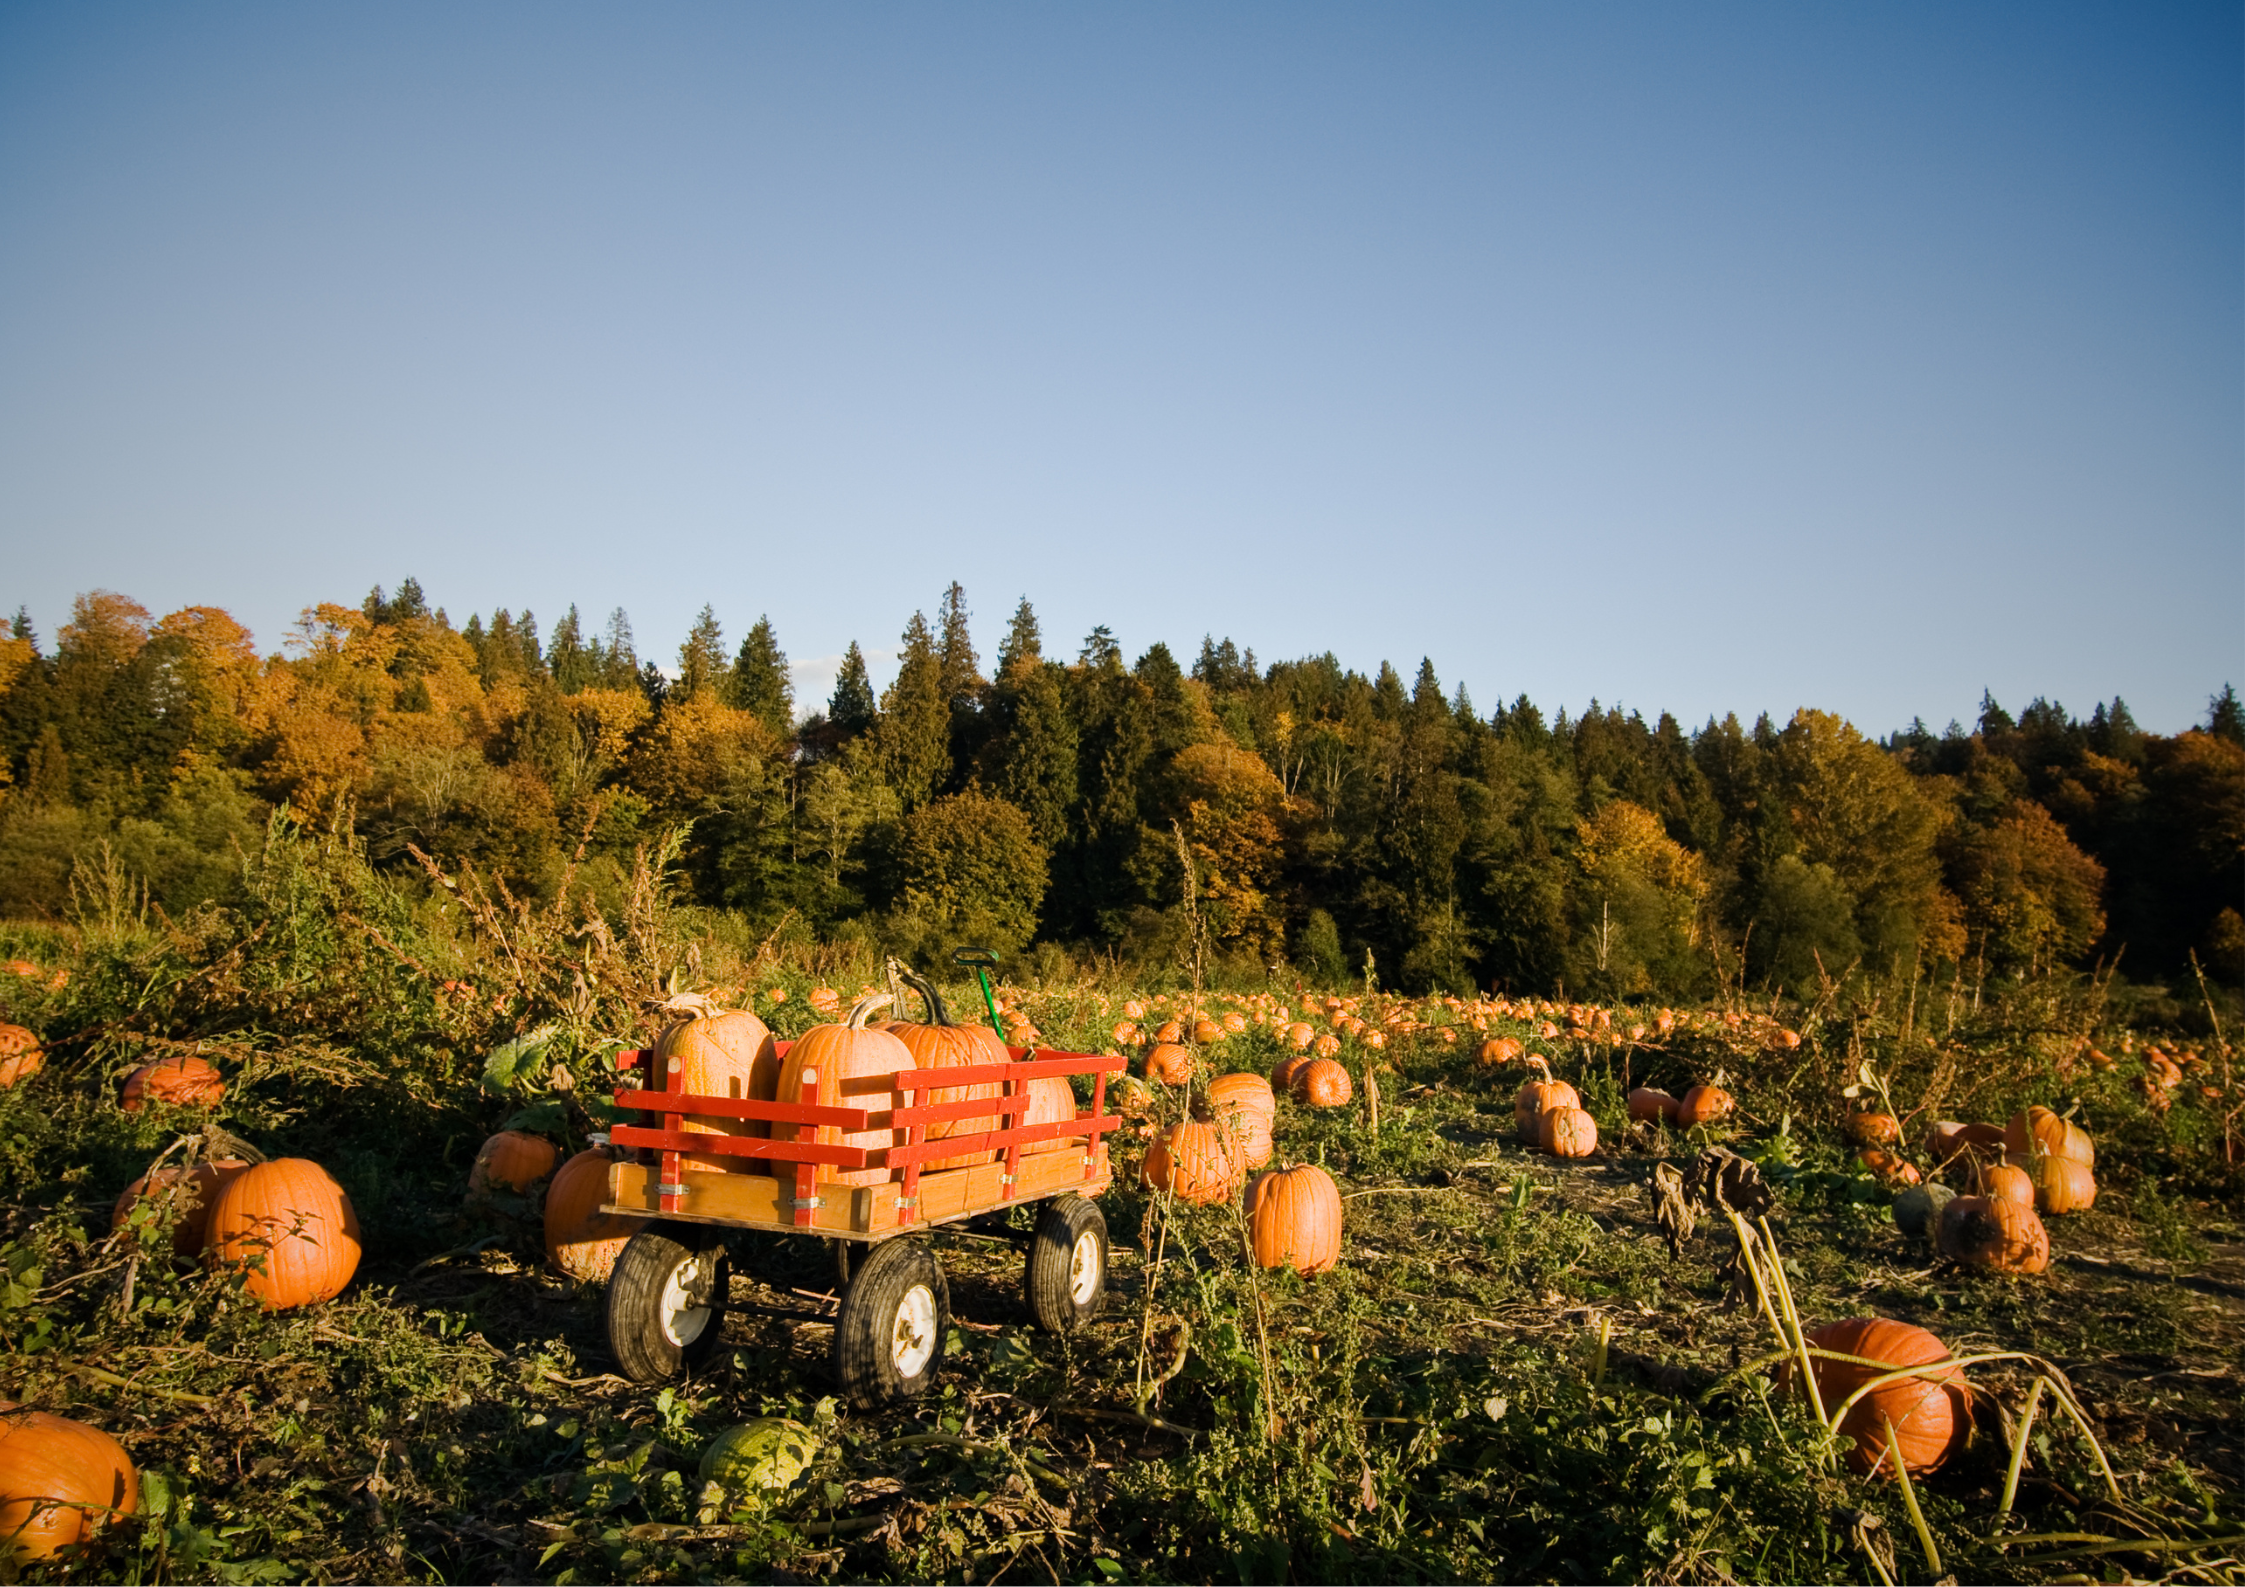 A wagon sitting in a pumpkin patch.